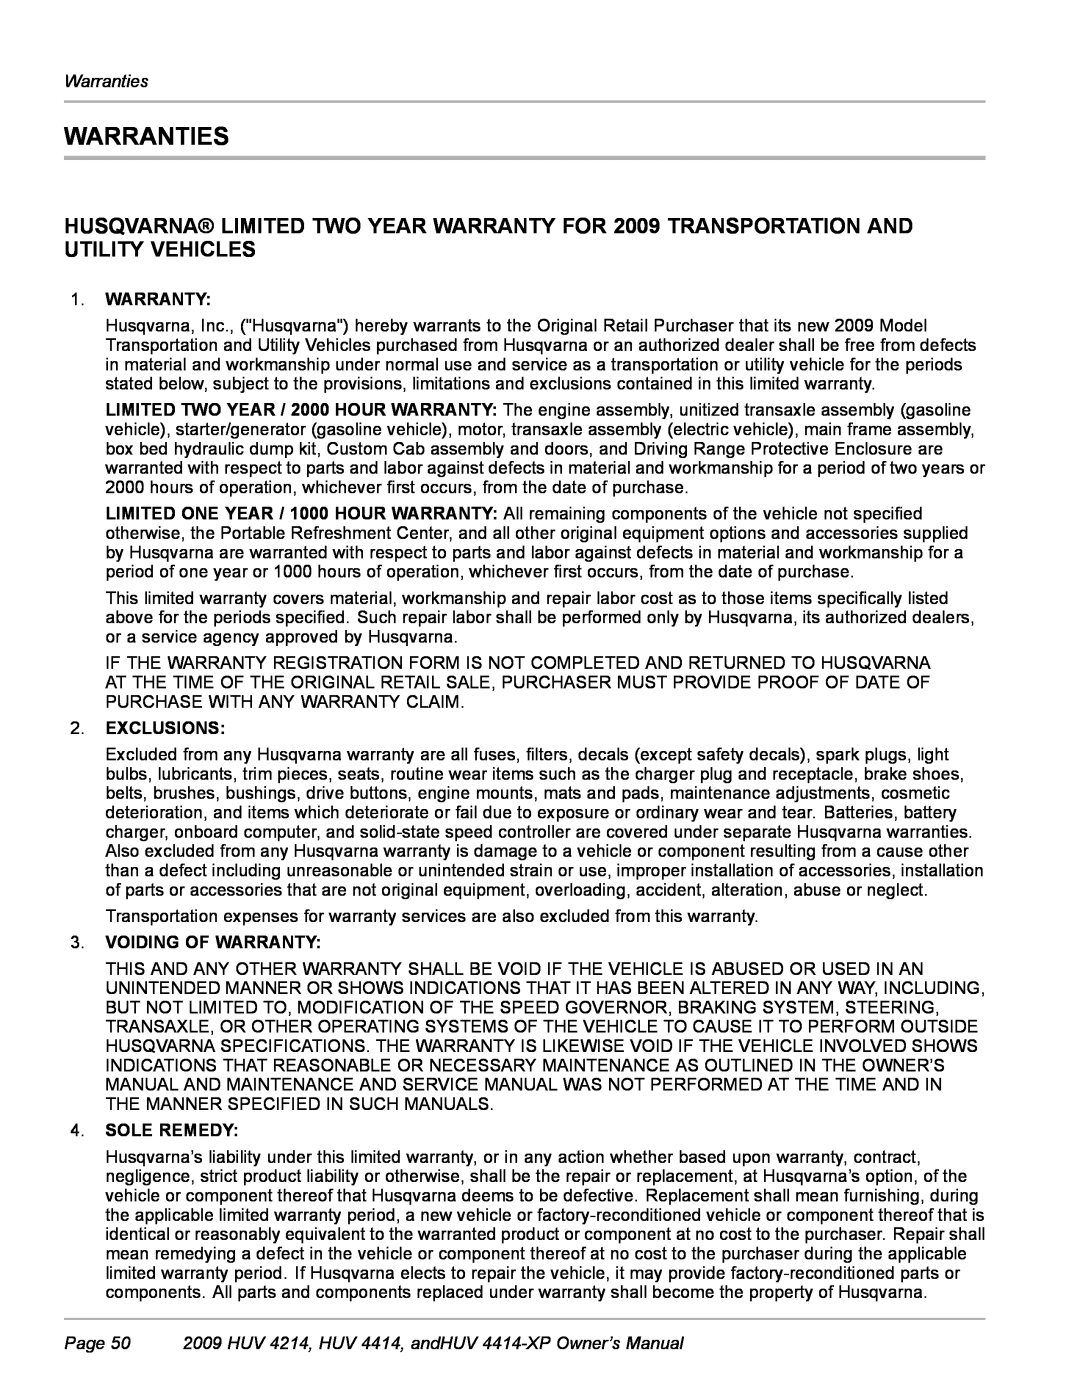 Husqvarna Warranties, Page 50 2009 HUV 4214, HUV 4414, andHUV 4414-XP Owner’s Manual, Warranty, Exclusions, Sole Remedy 